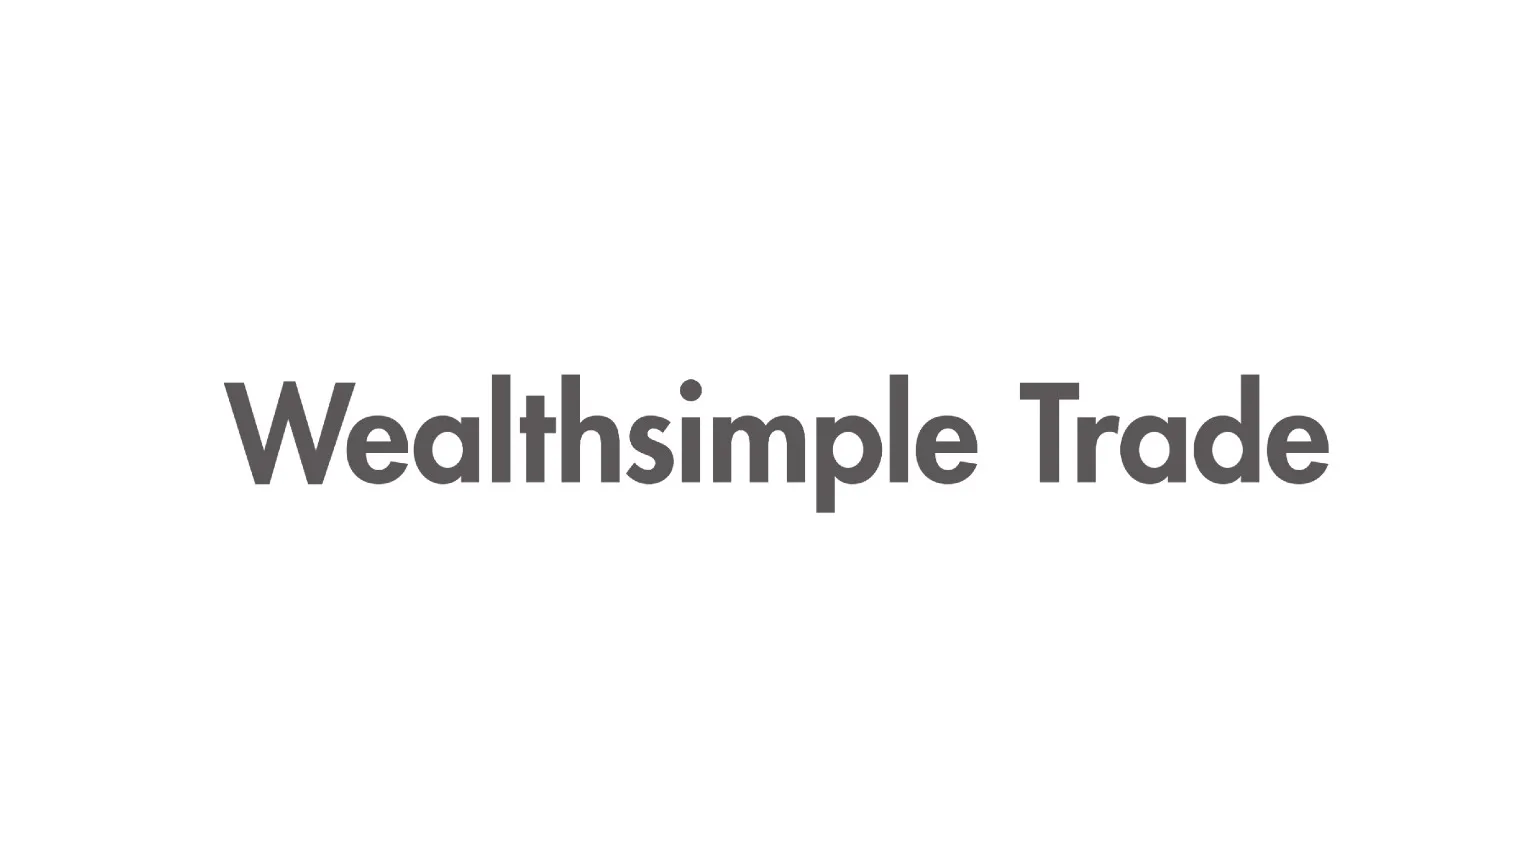 Wealthsimple Trade Online Broker Review August 2020 ...